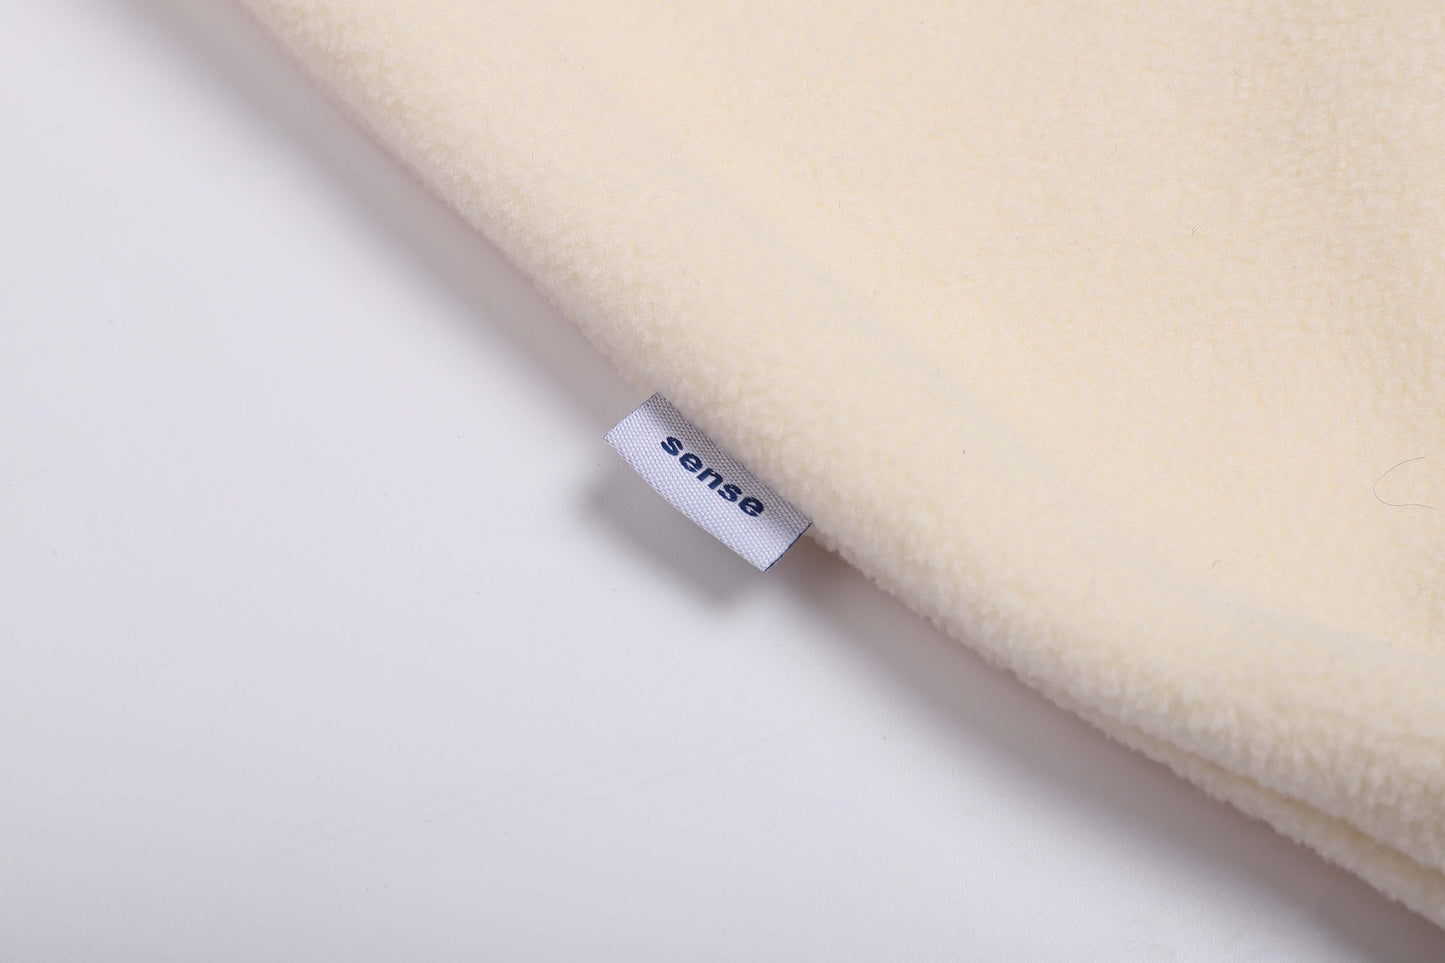 
                  
                    Embroidery Polar Fleece Pullover Blue【L22-38BL】
                  
                